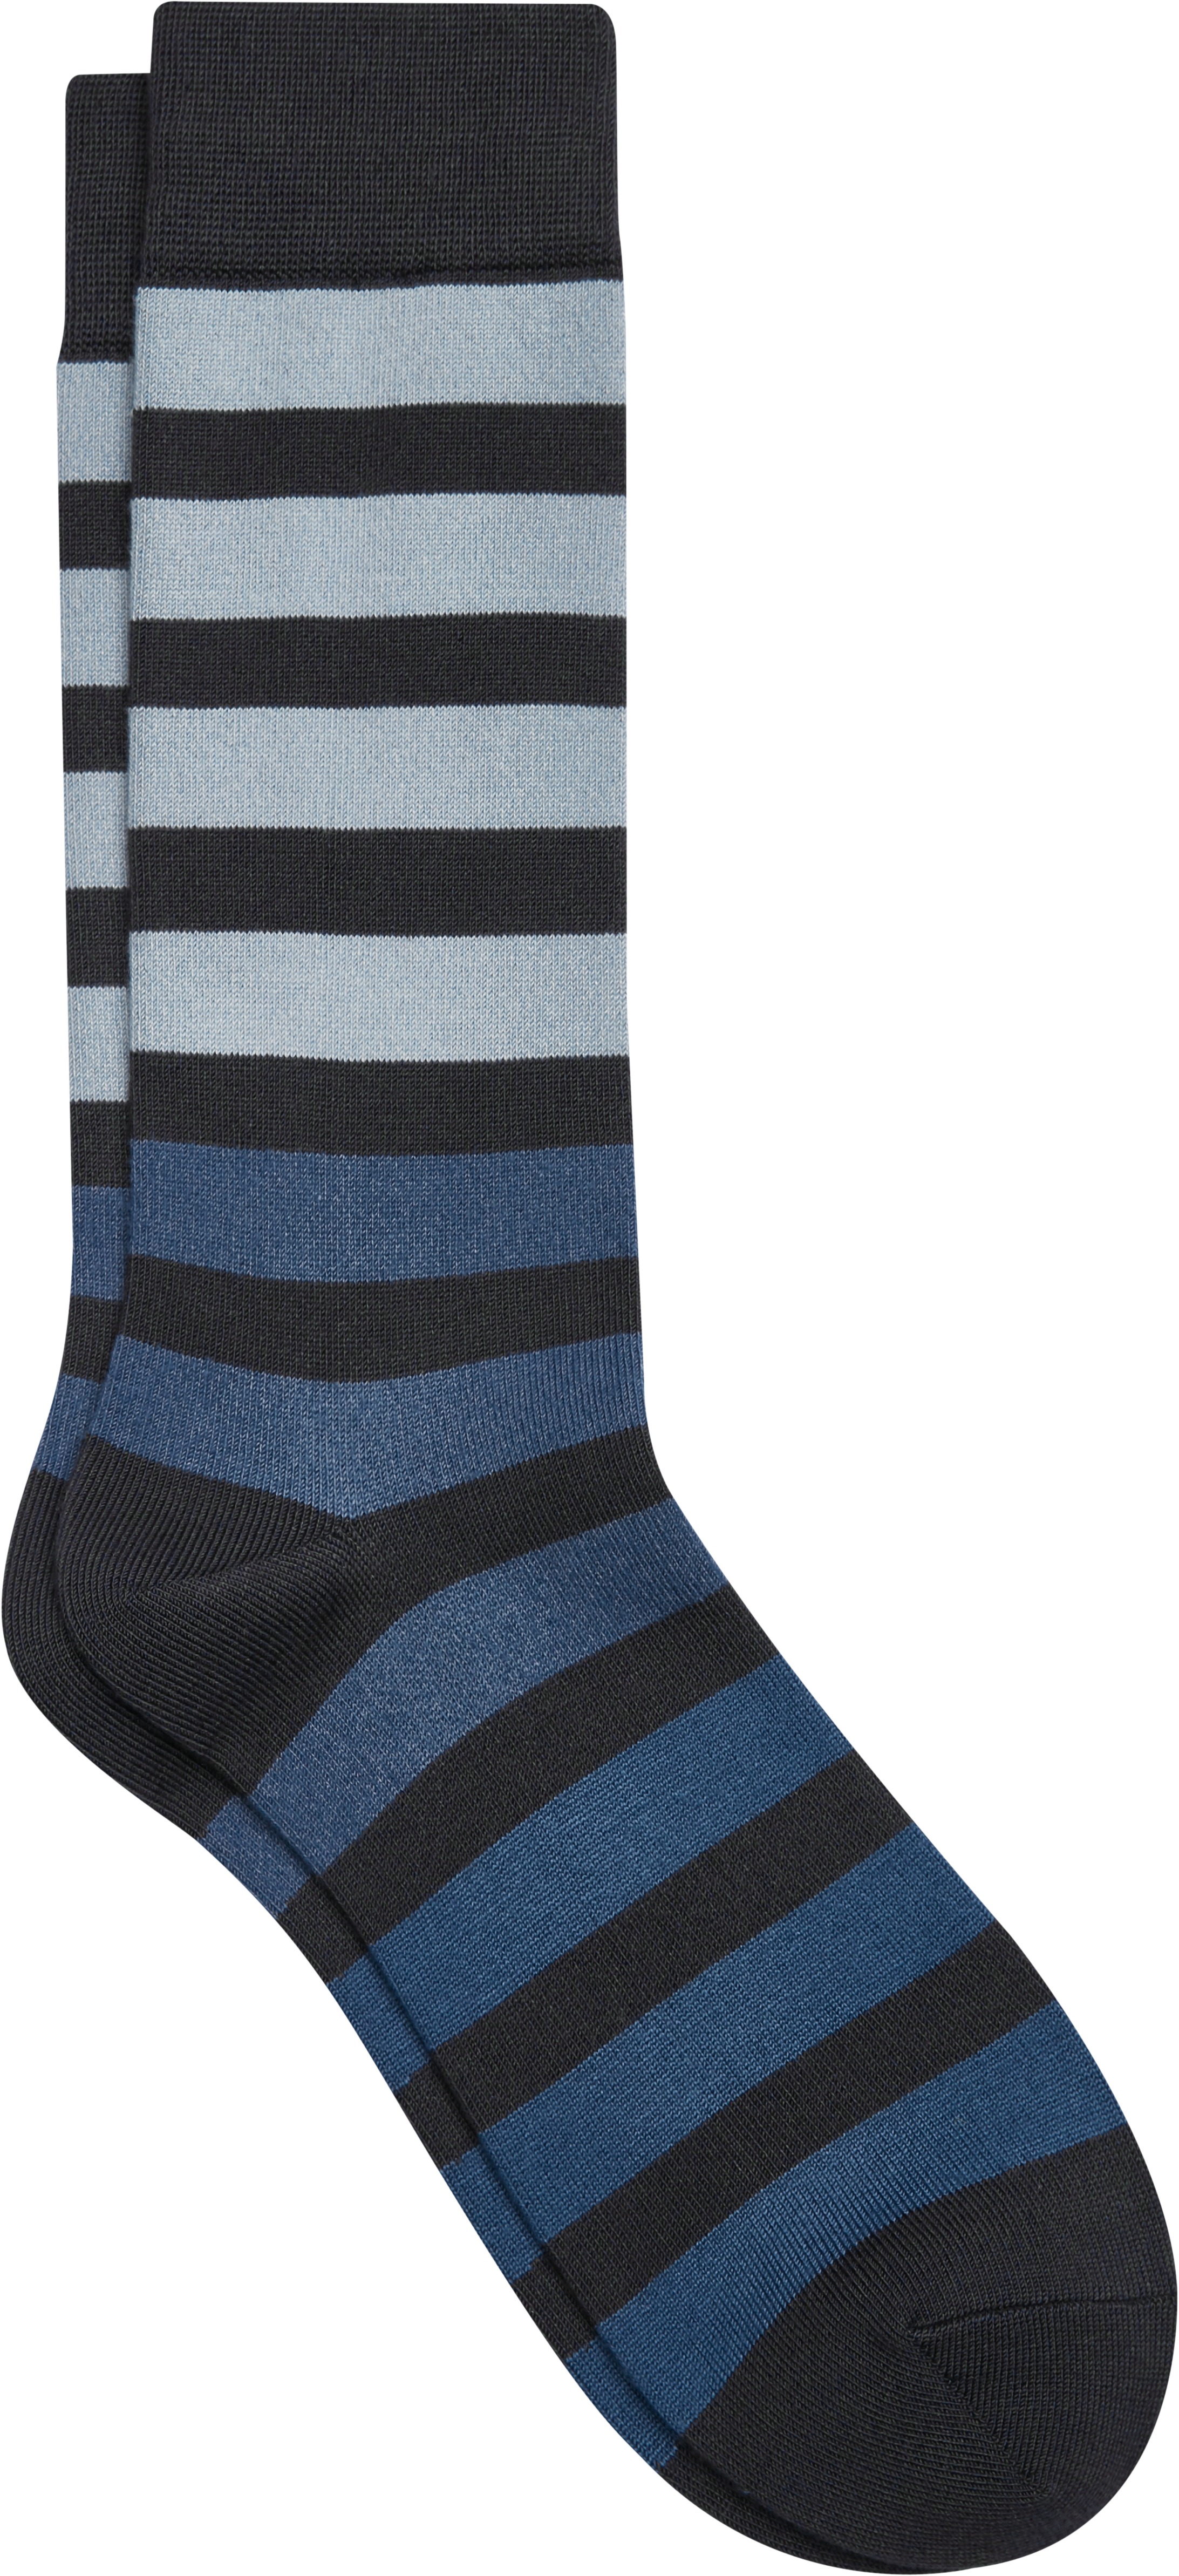 Joseph Abboud Soft Socks Blue Stripe Socks, 1 Pair - Men's Accessories ...